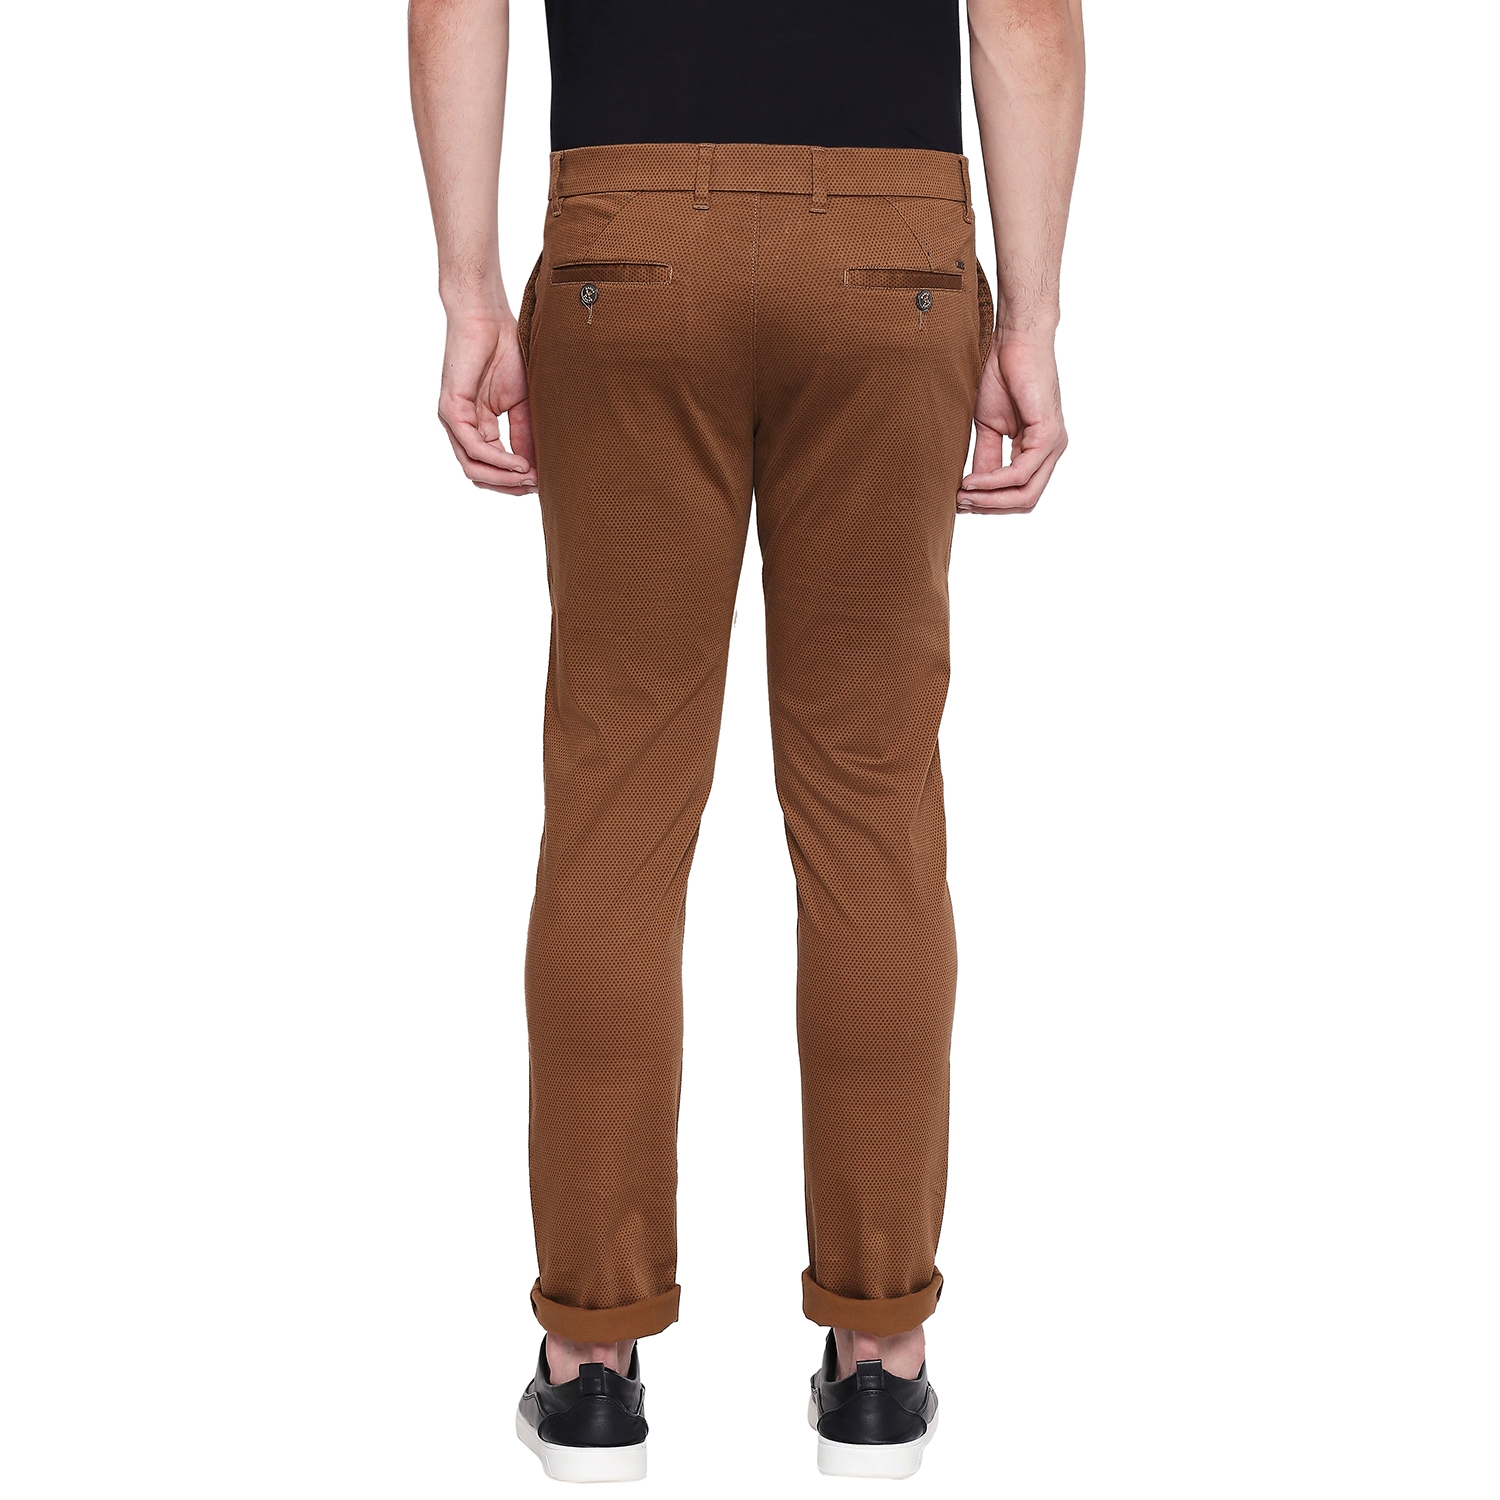 Basics | Men's Khaki Cotton Blend Printed Trouser 1